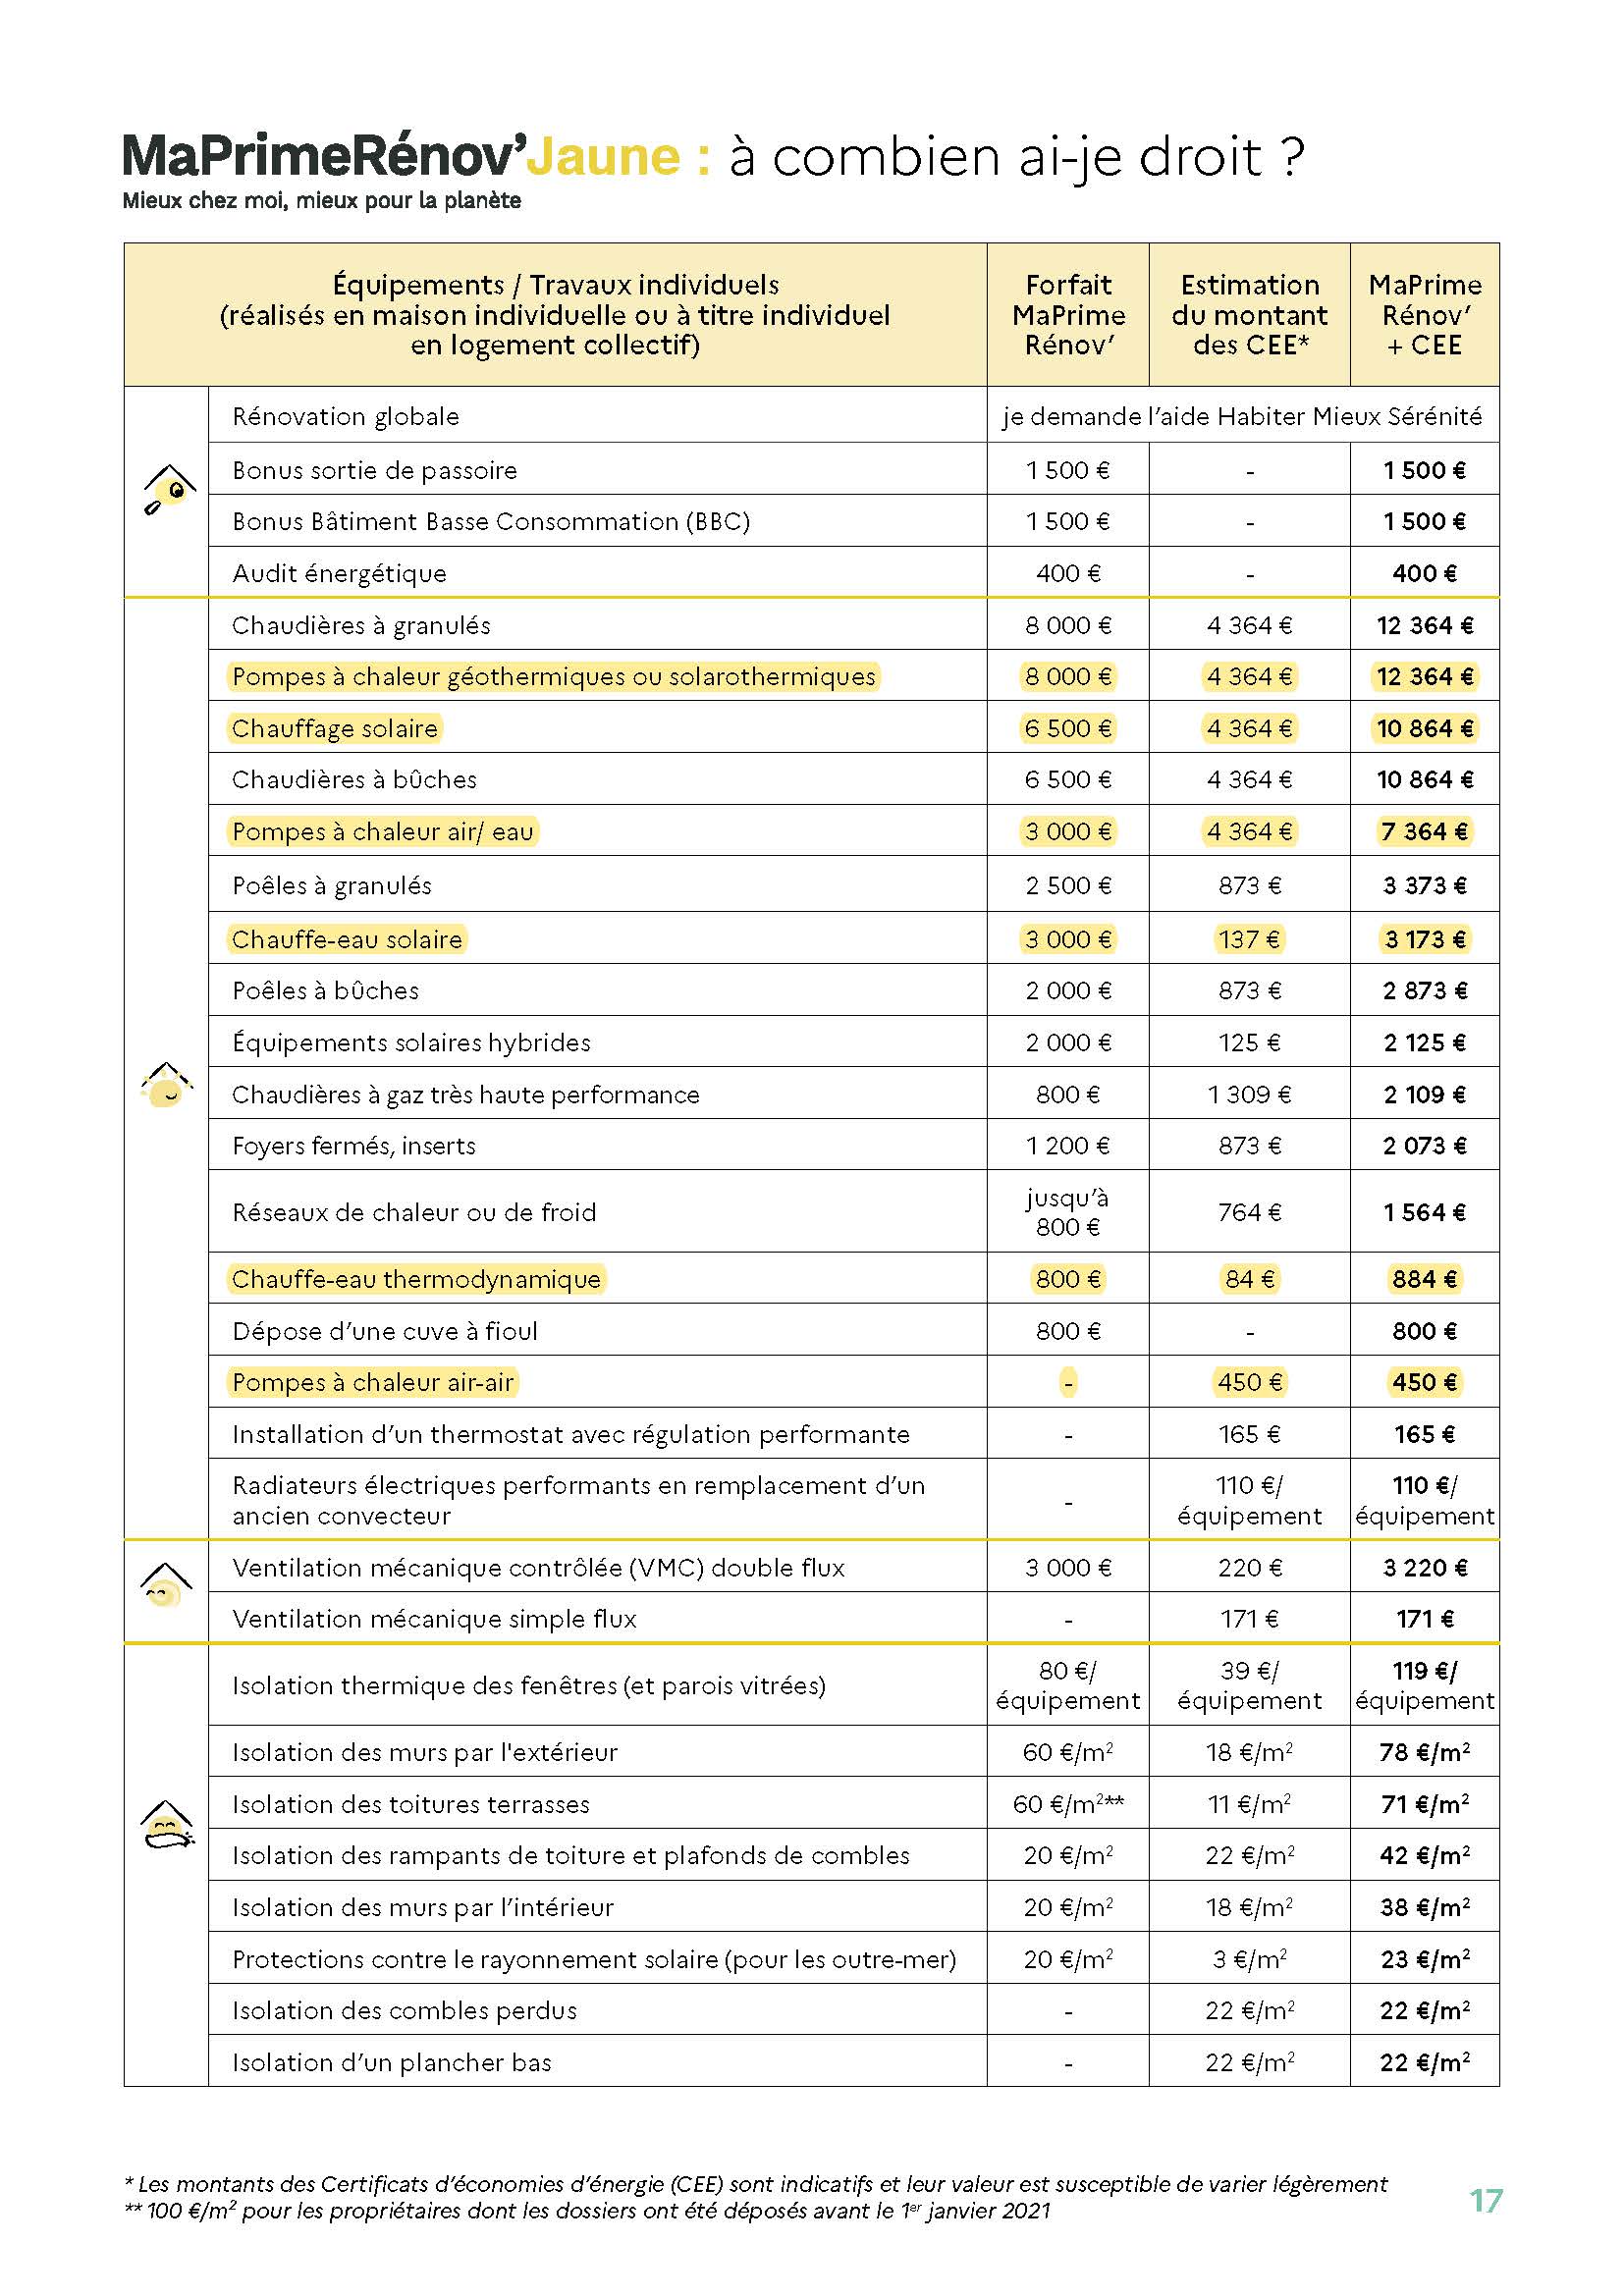 Domotec-montant-aides-MPR2021-jaune